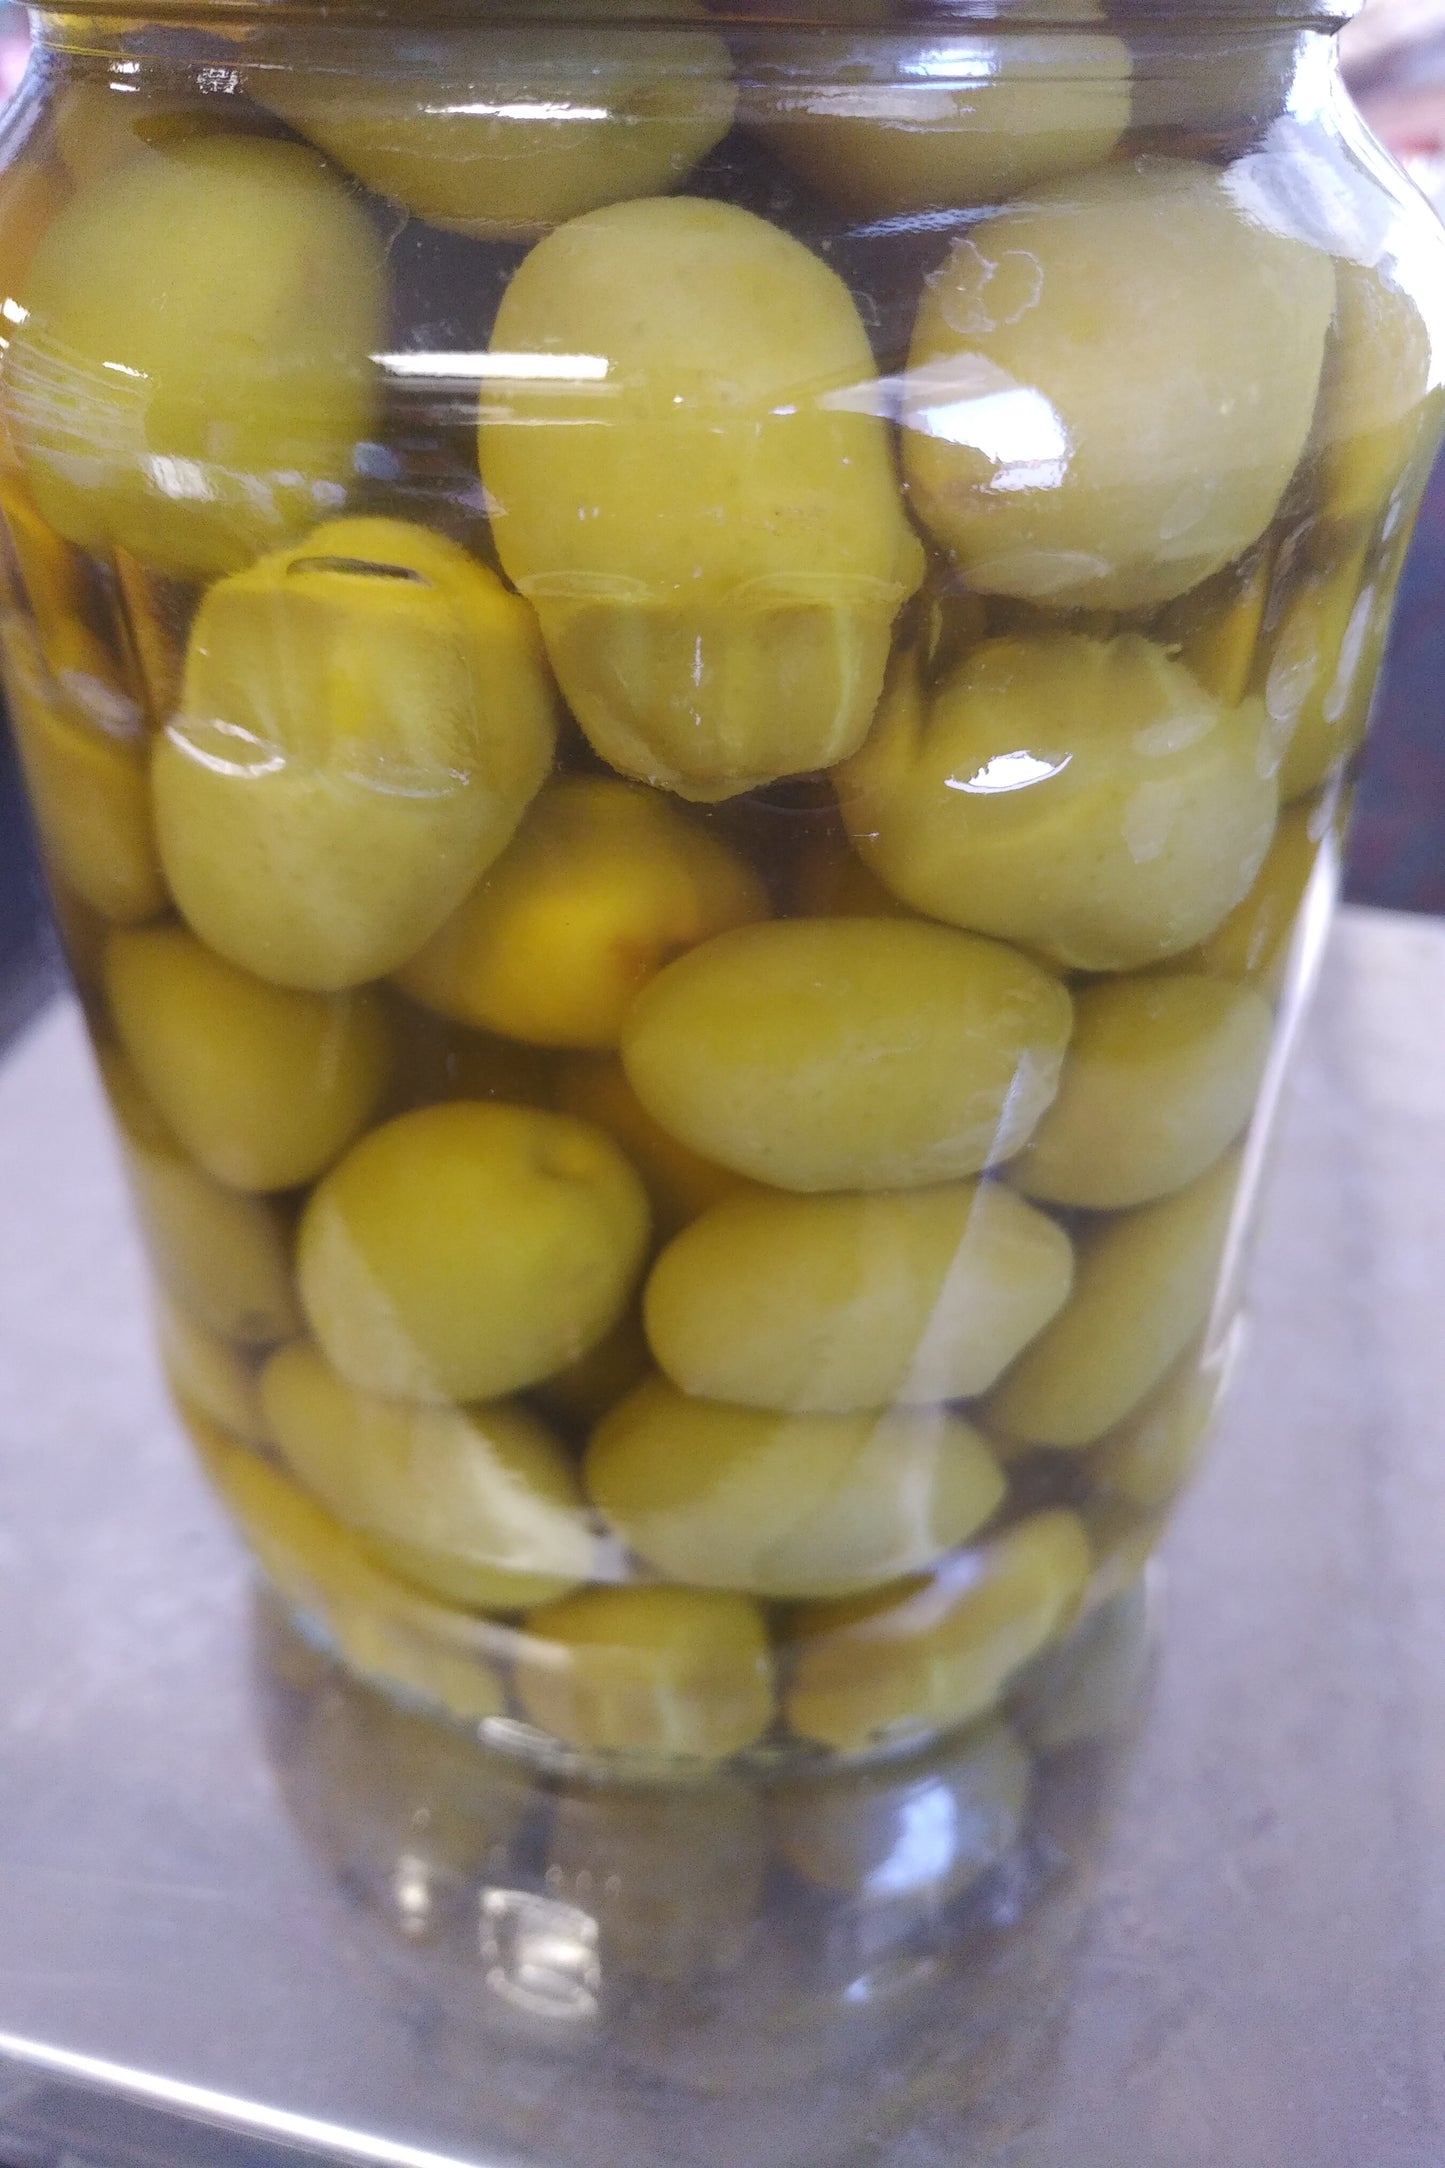 Ziyad Pickled whole Green Olives 16oz